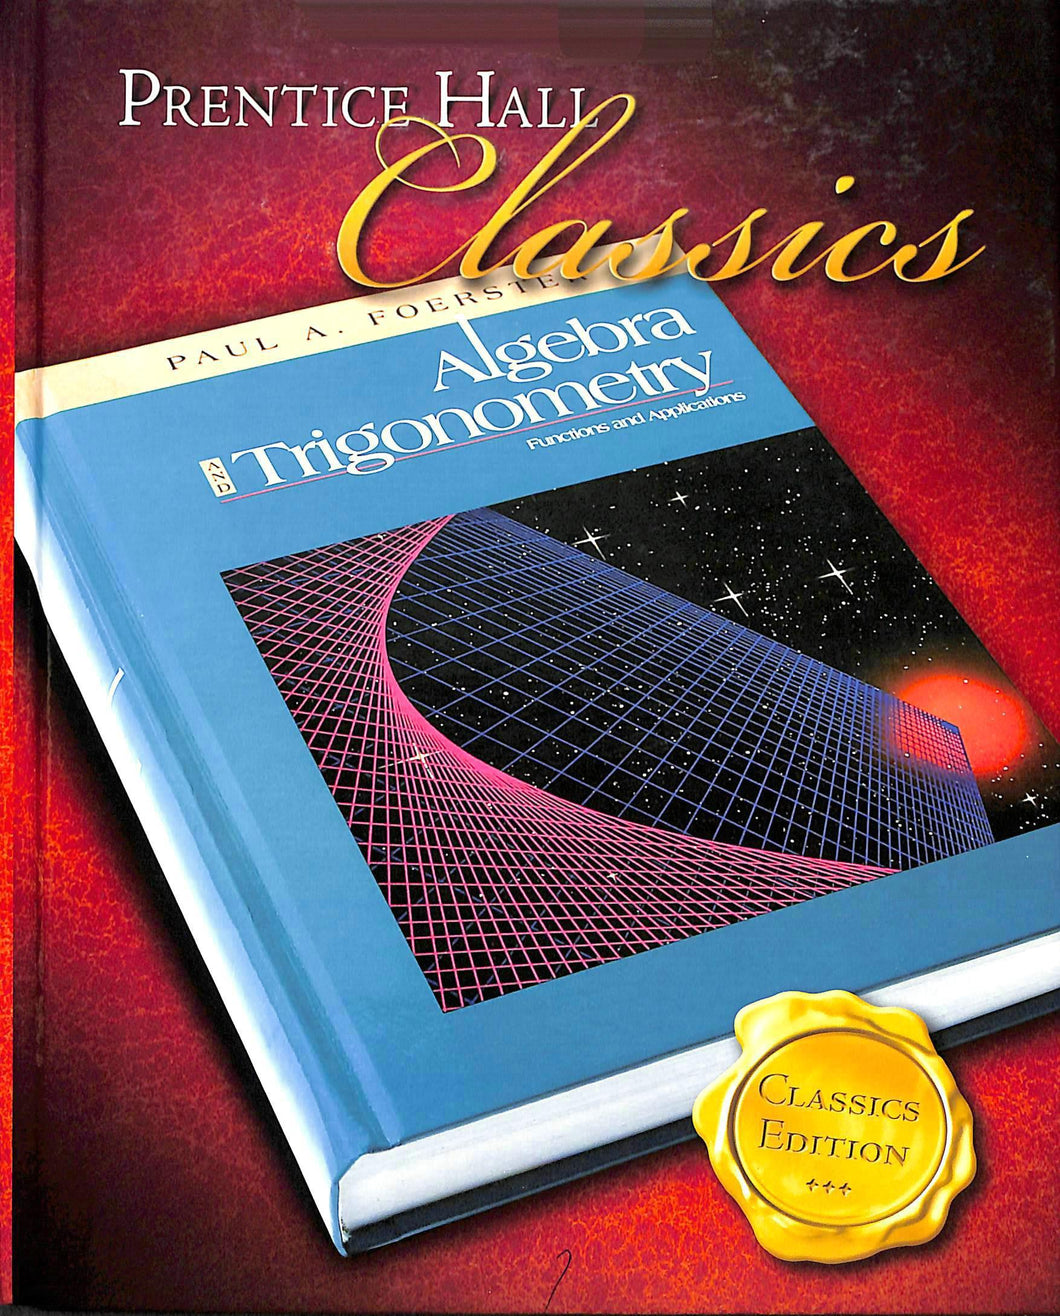 Foerster's Algebra 2 & Trigonometry Student Textbook